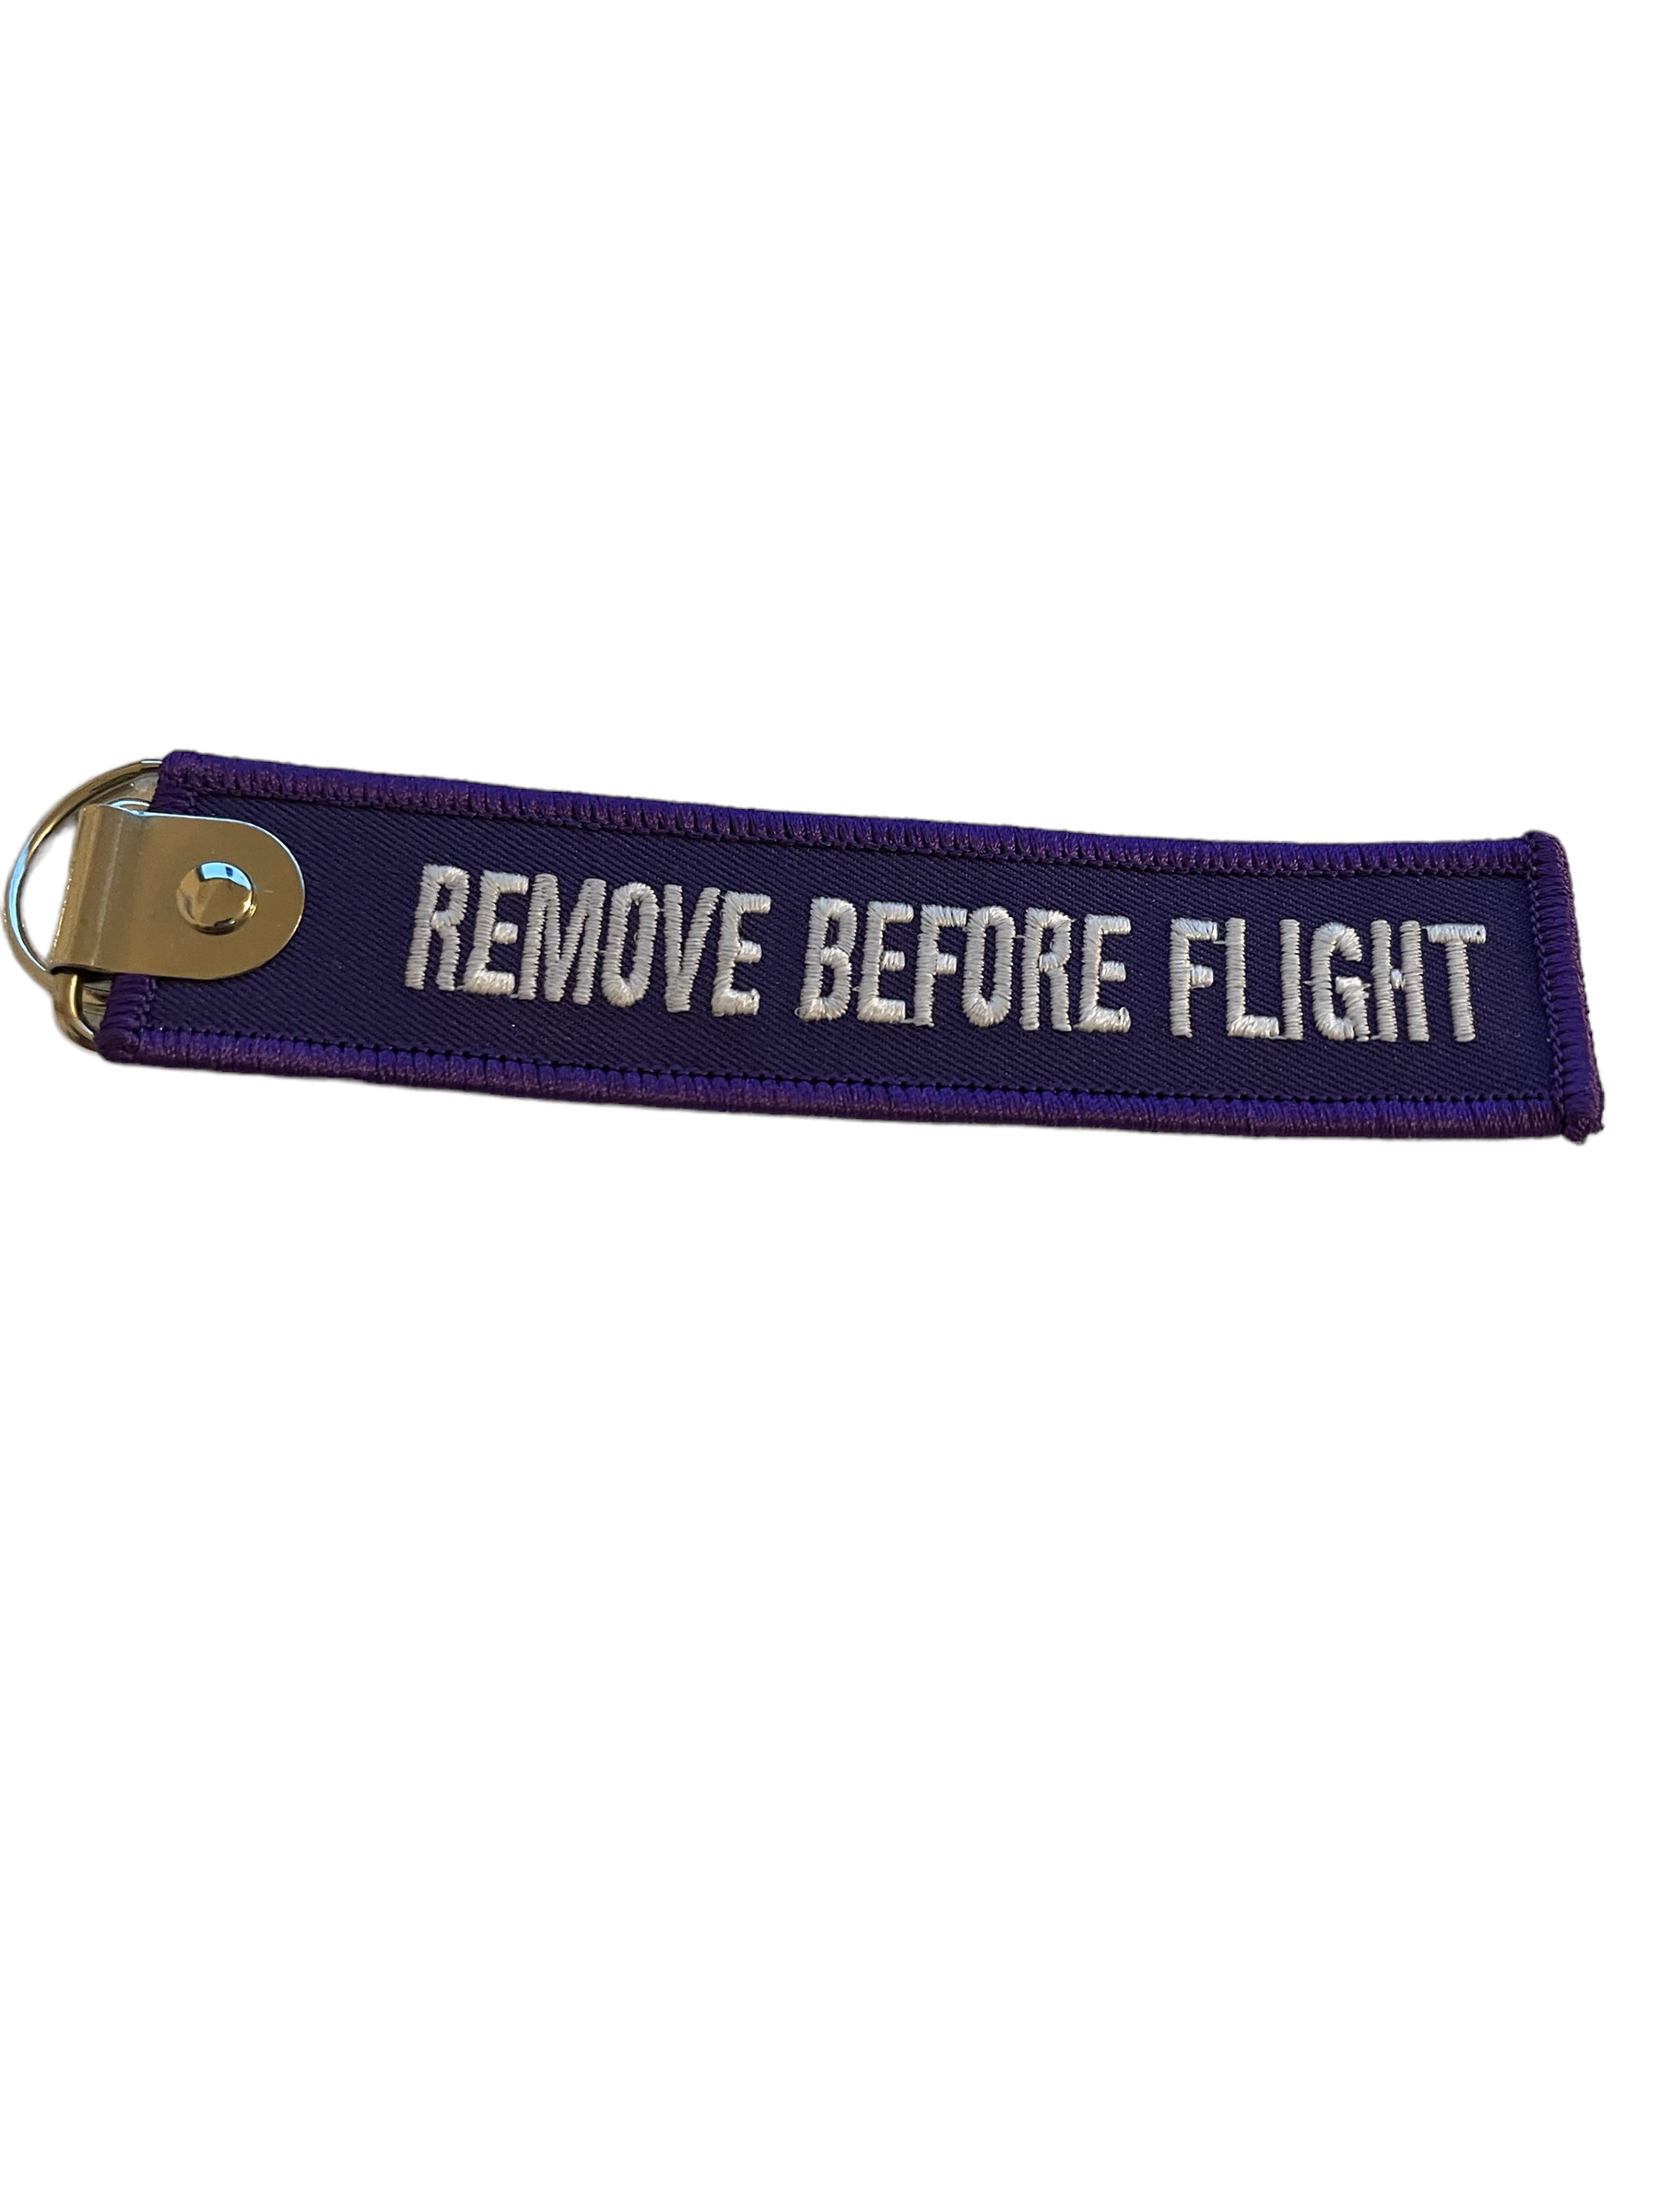 'Remove Before Flight' Purple Keyring Flight Tag - Image 2 of 2